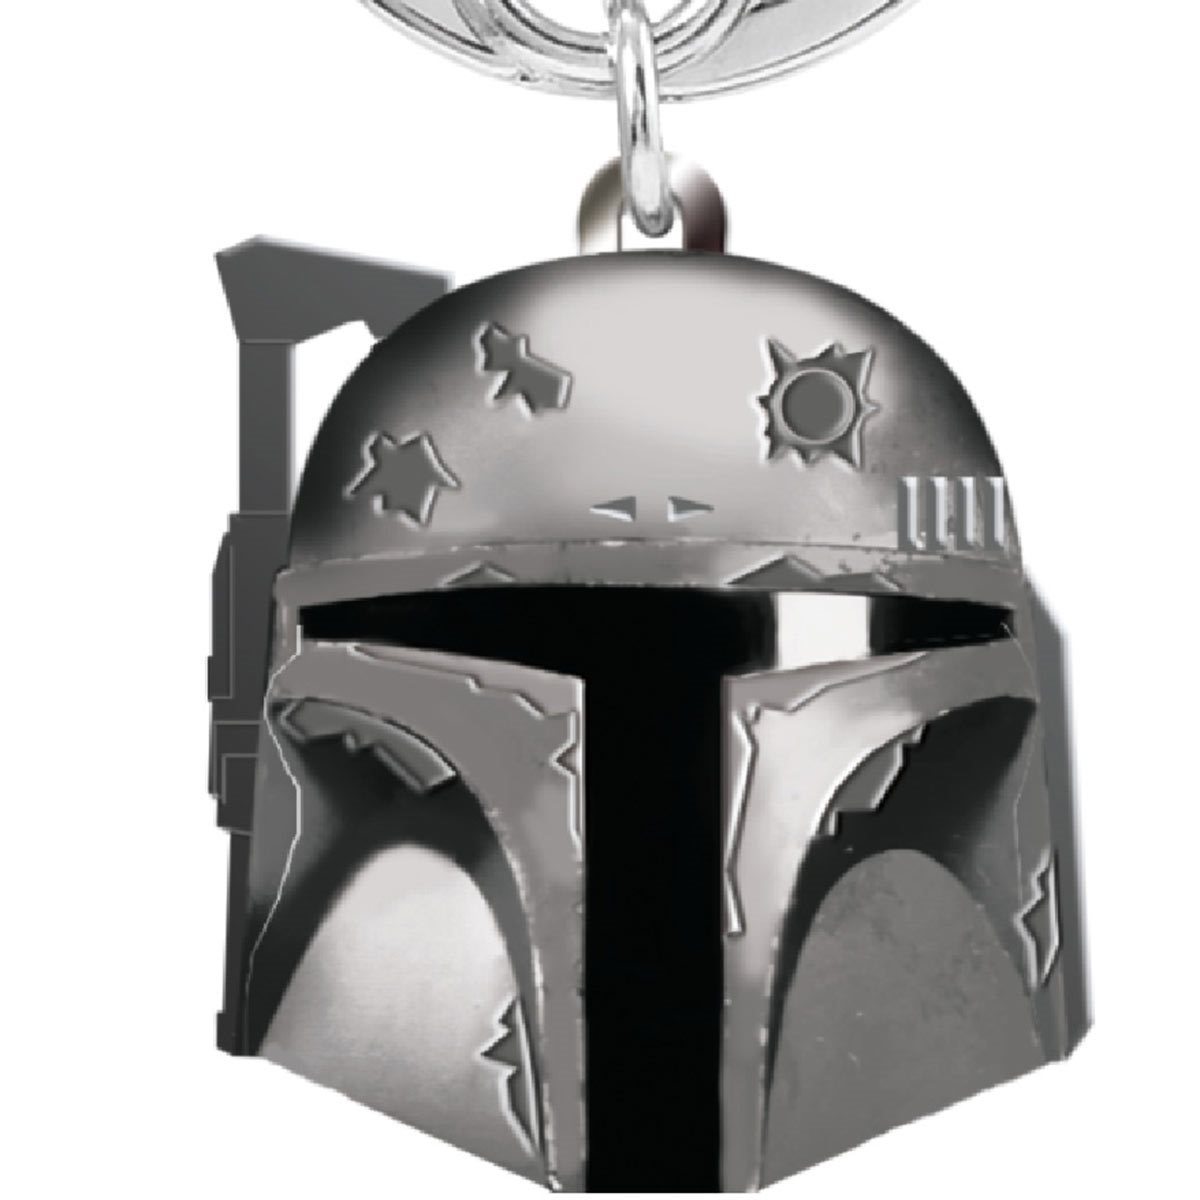 Star Wars: The Mandalorian Helmet Pewter Key Chain